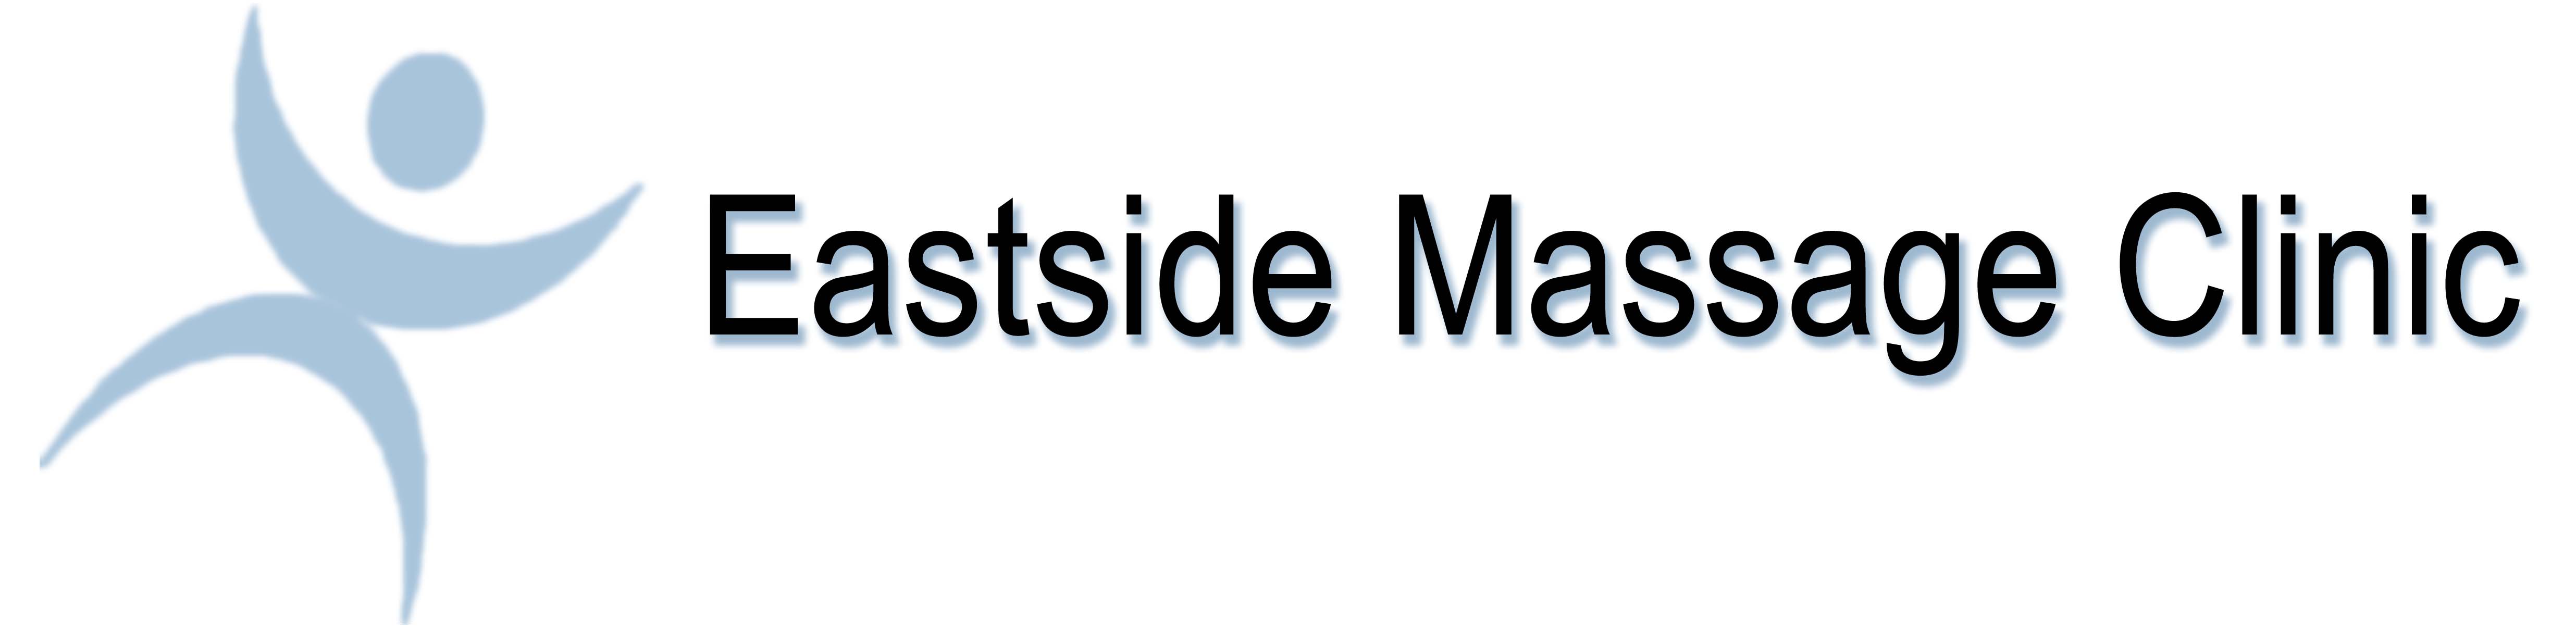 Eastside Massage Clinic - Bellevue, Washington